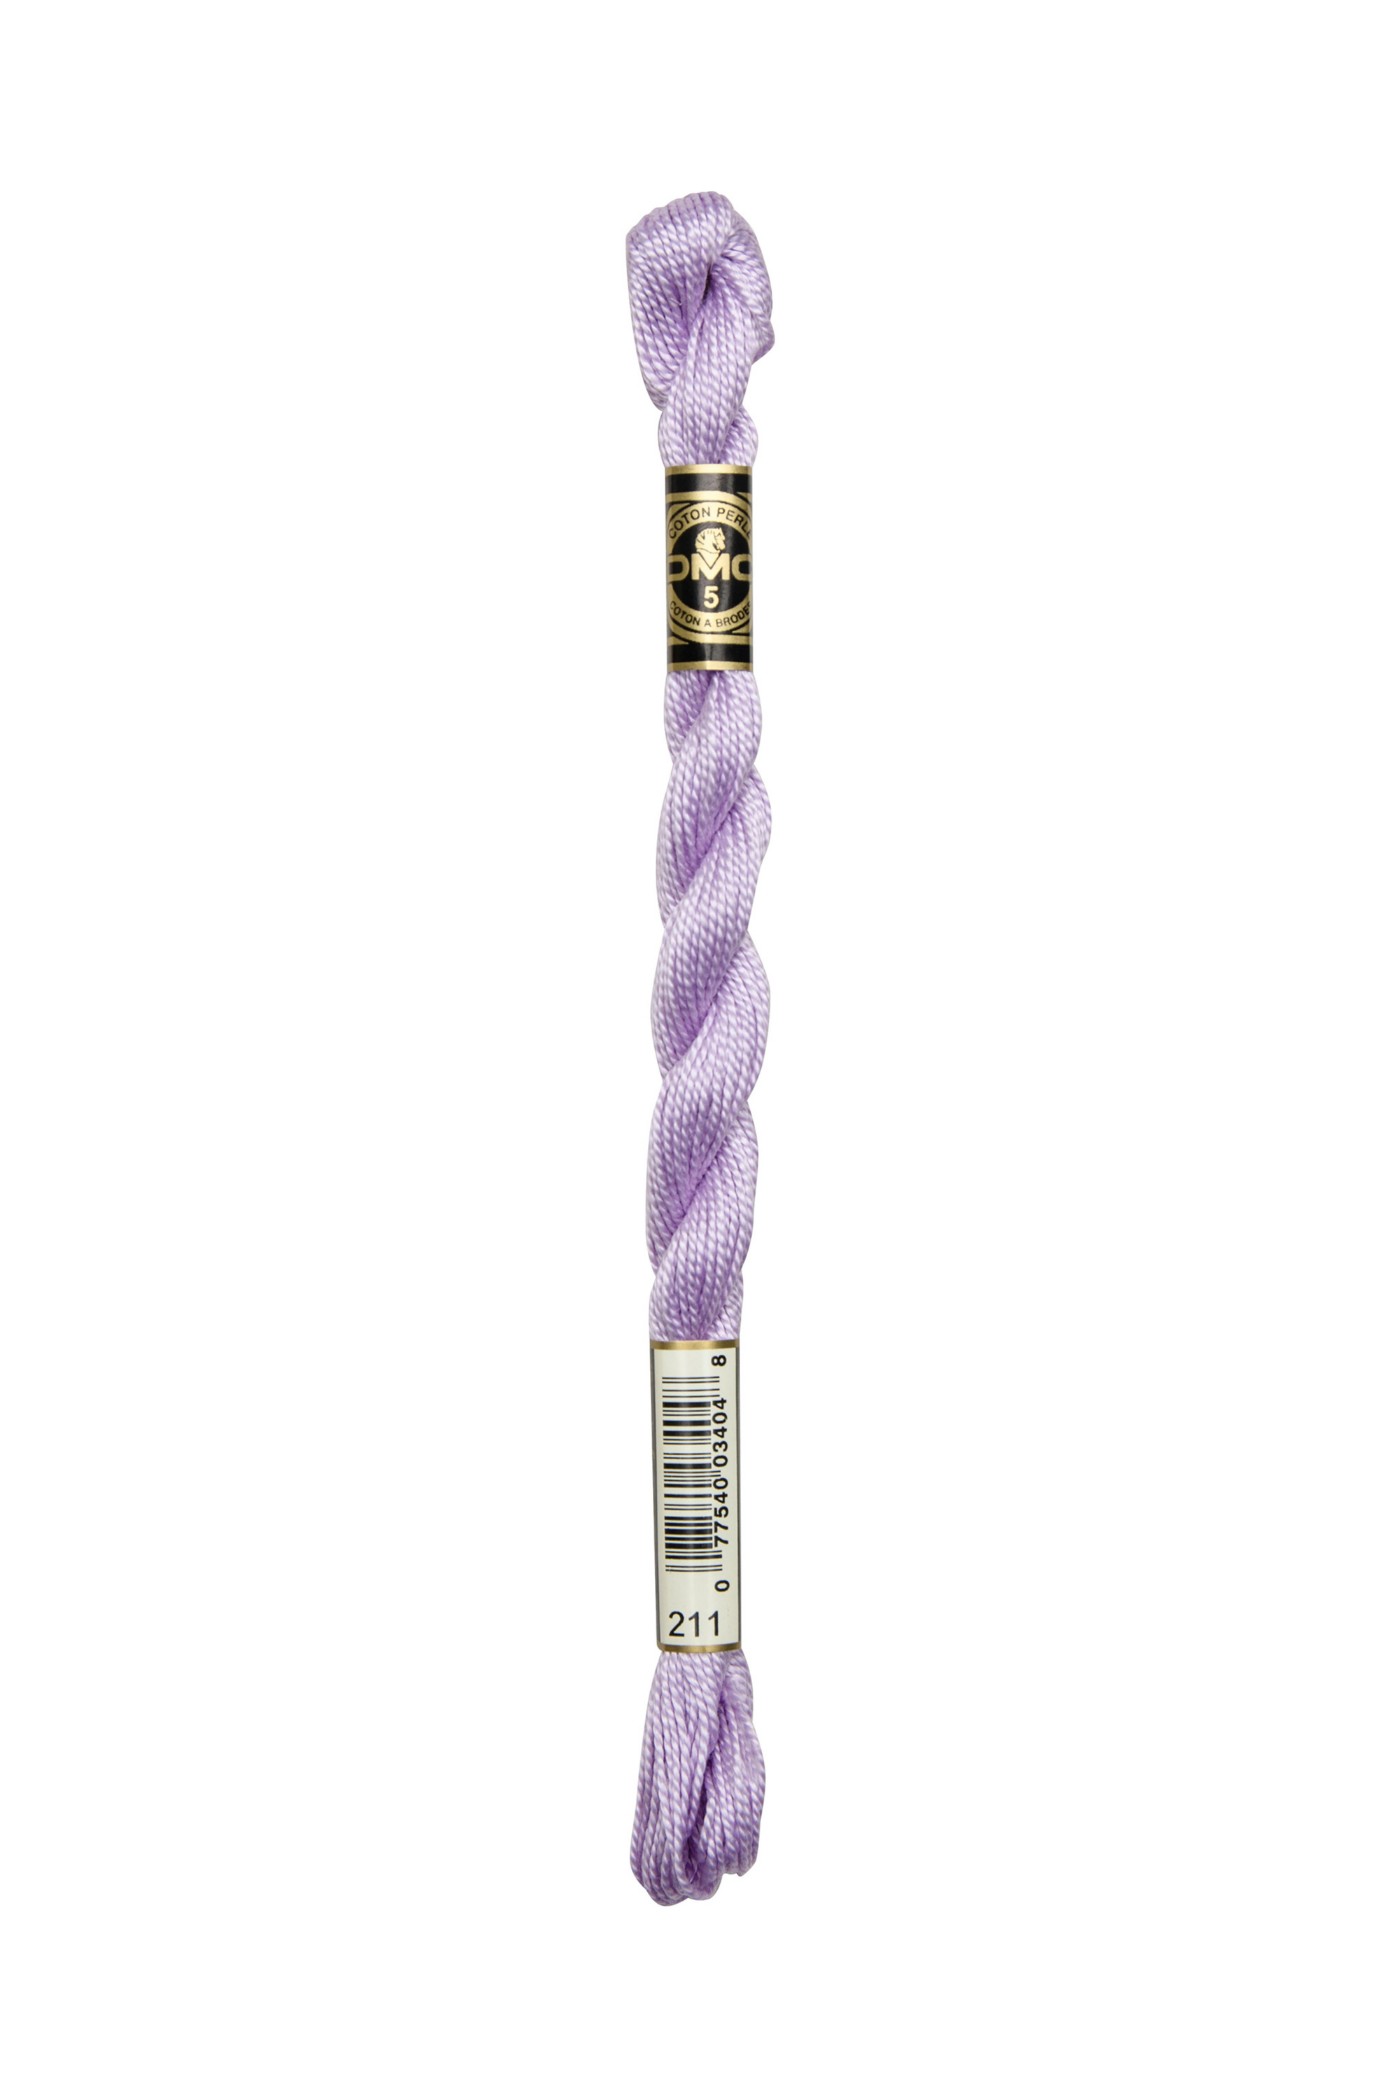 DMC Pearl Cotton Skeins Size 5 / 211 LT LavenderEmbroidery Floss by DMC